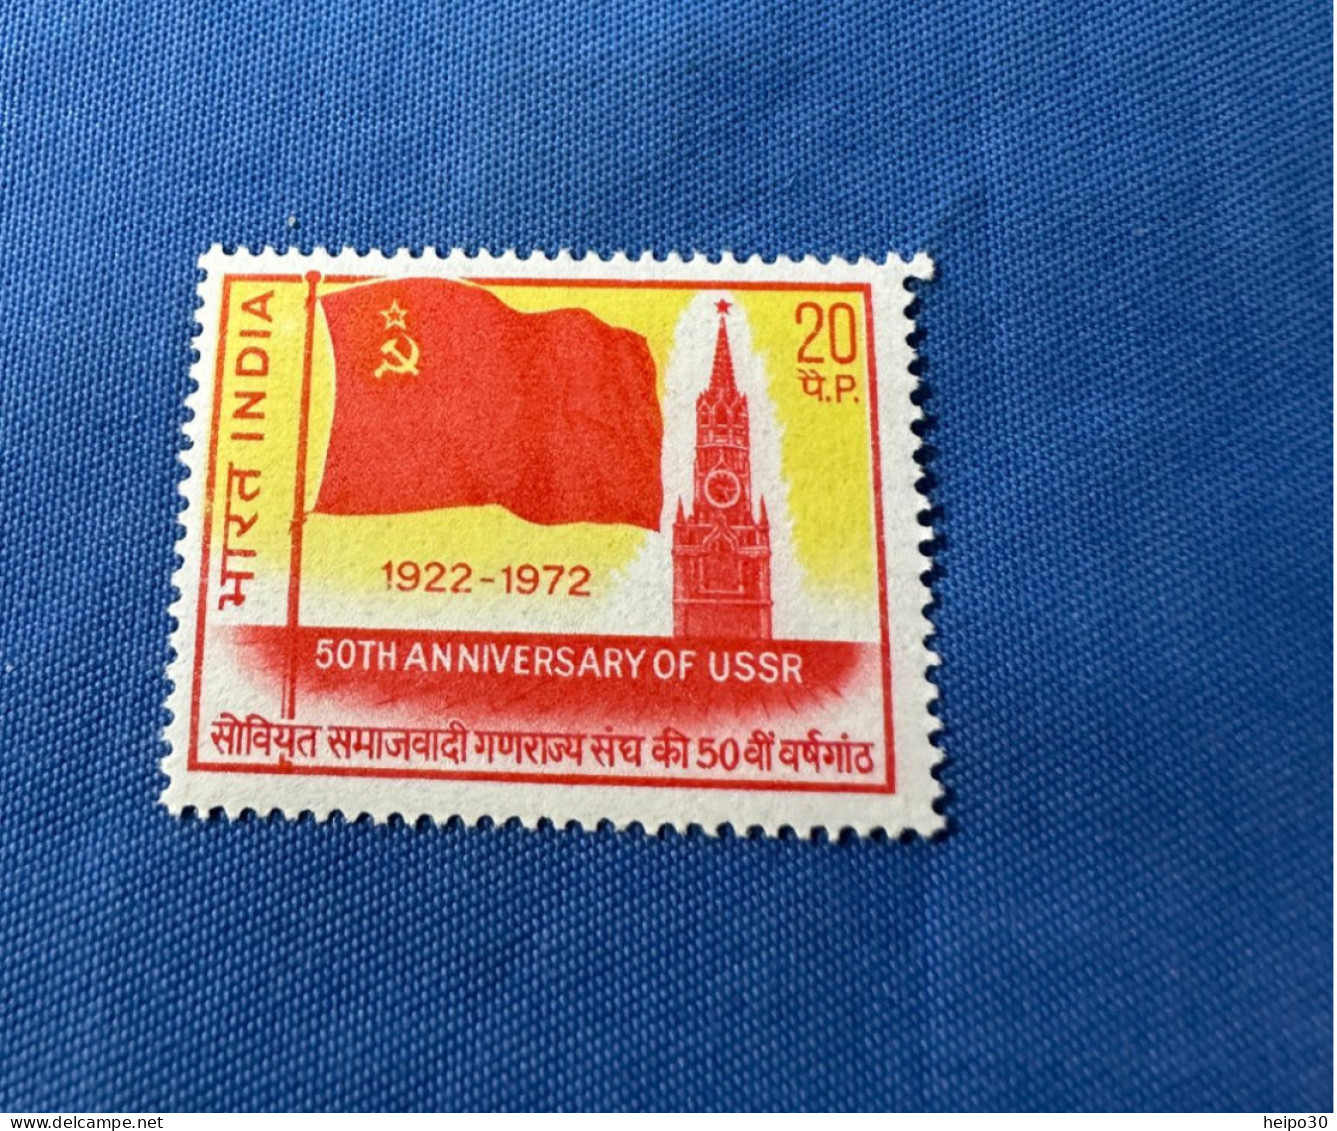 India 1972 Michel 551 UdSSR 50 Jahre MNH - Unused Stamps